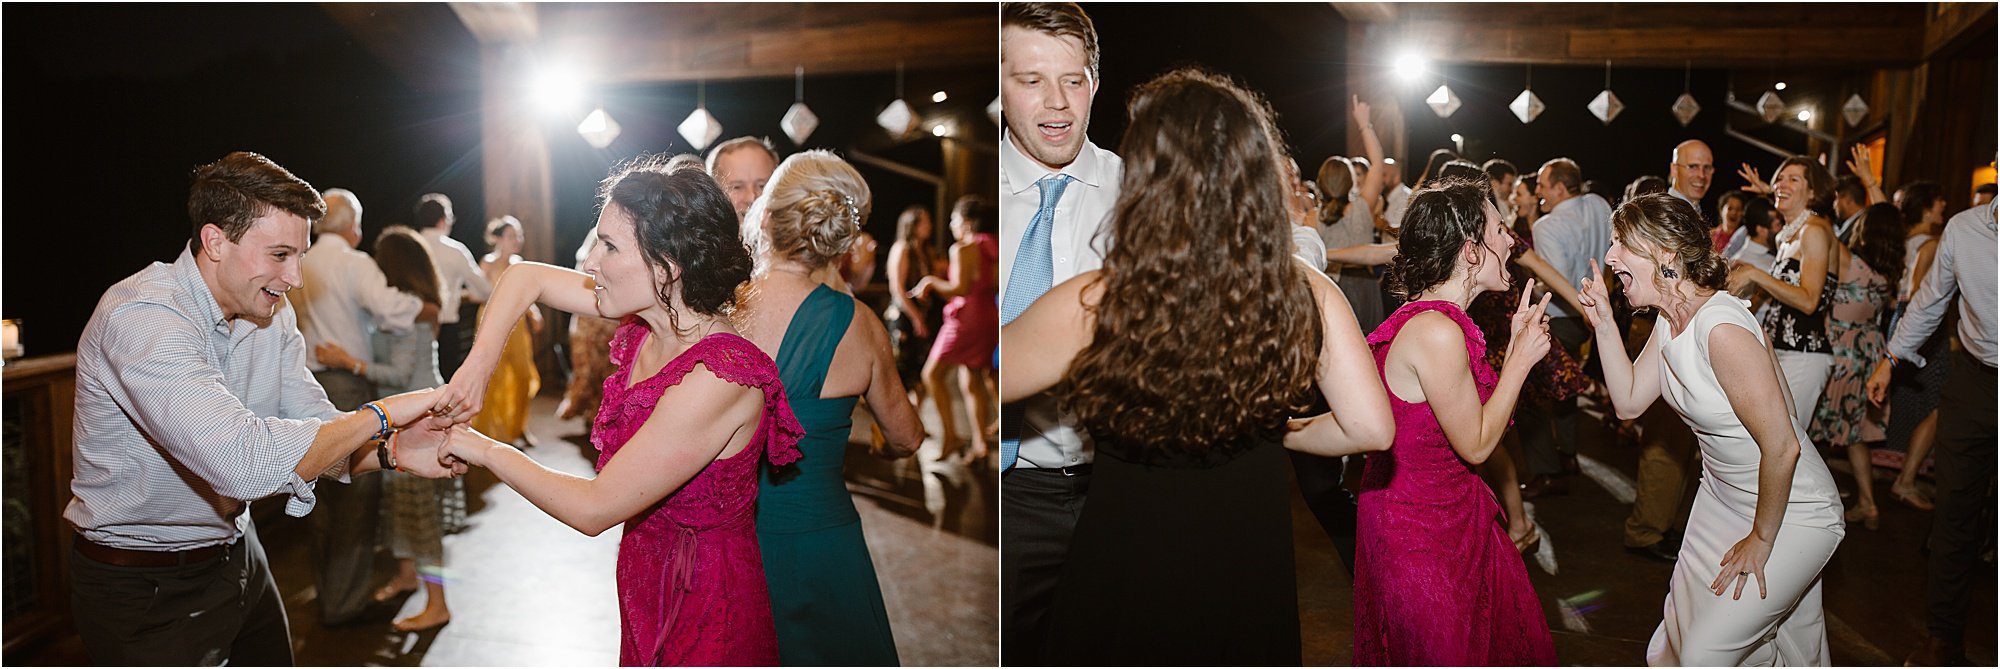 wedding reception dancing photos